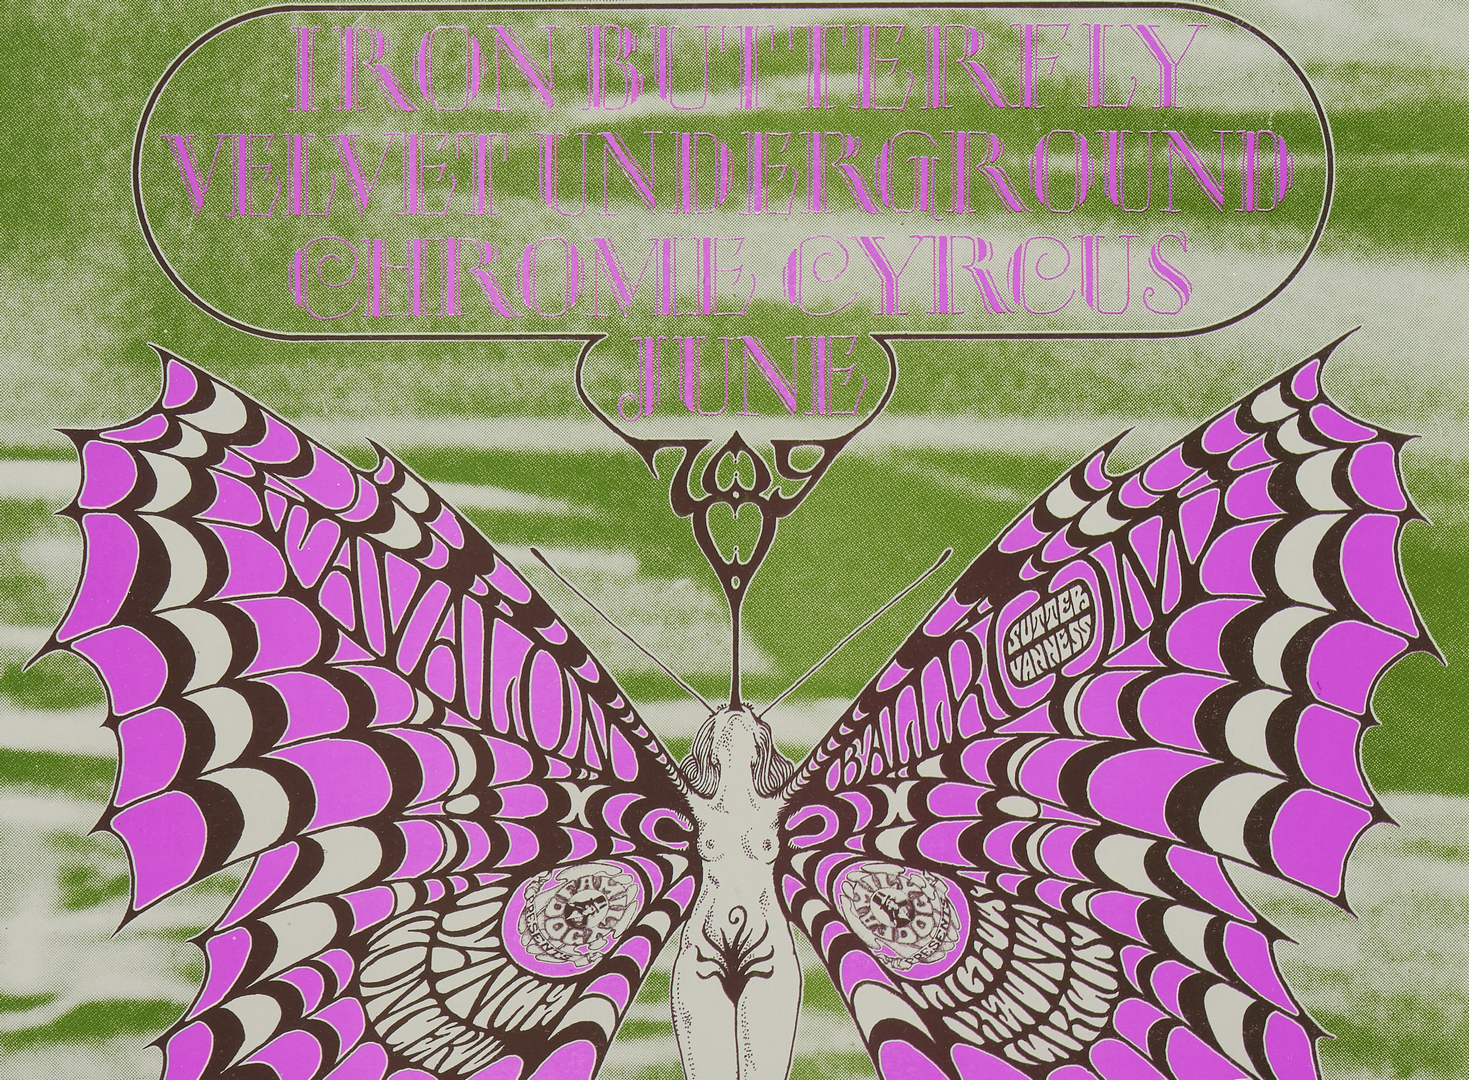 Lot 508: 2 Rock Posters – Jeff Beck + Iron Butterfly/Velvet U